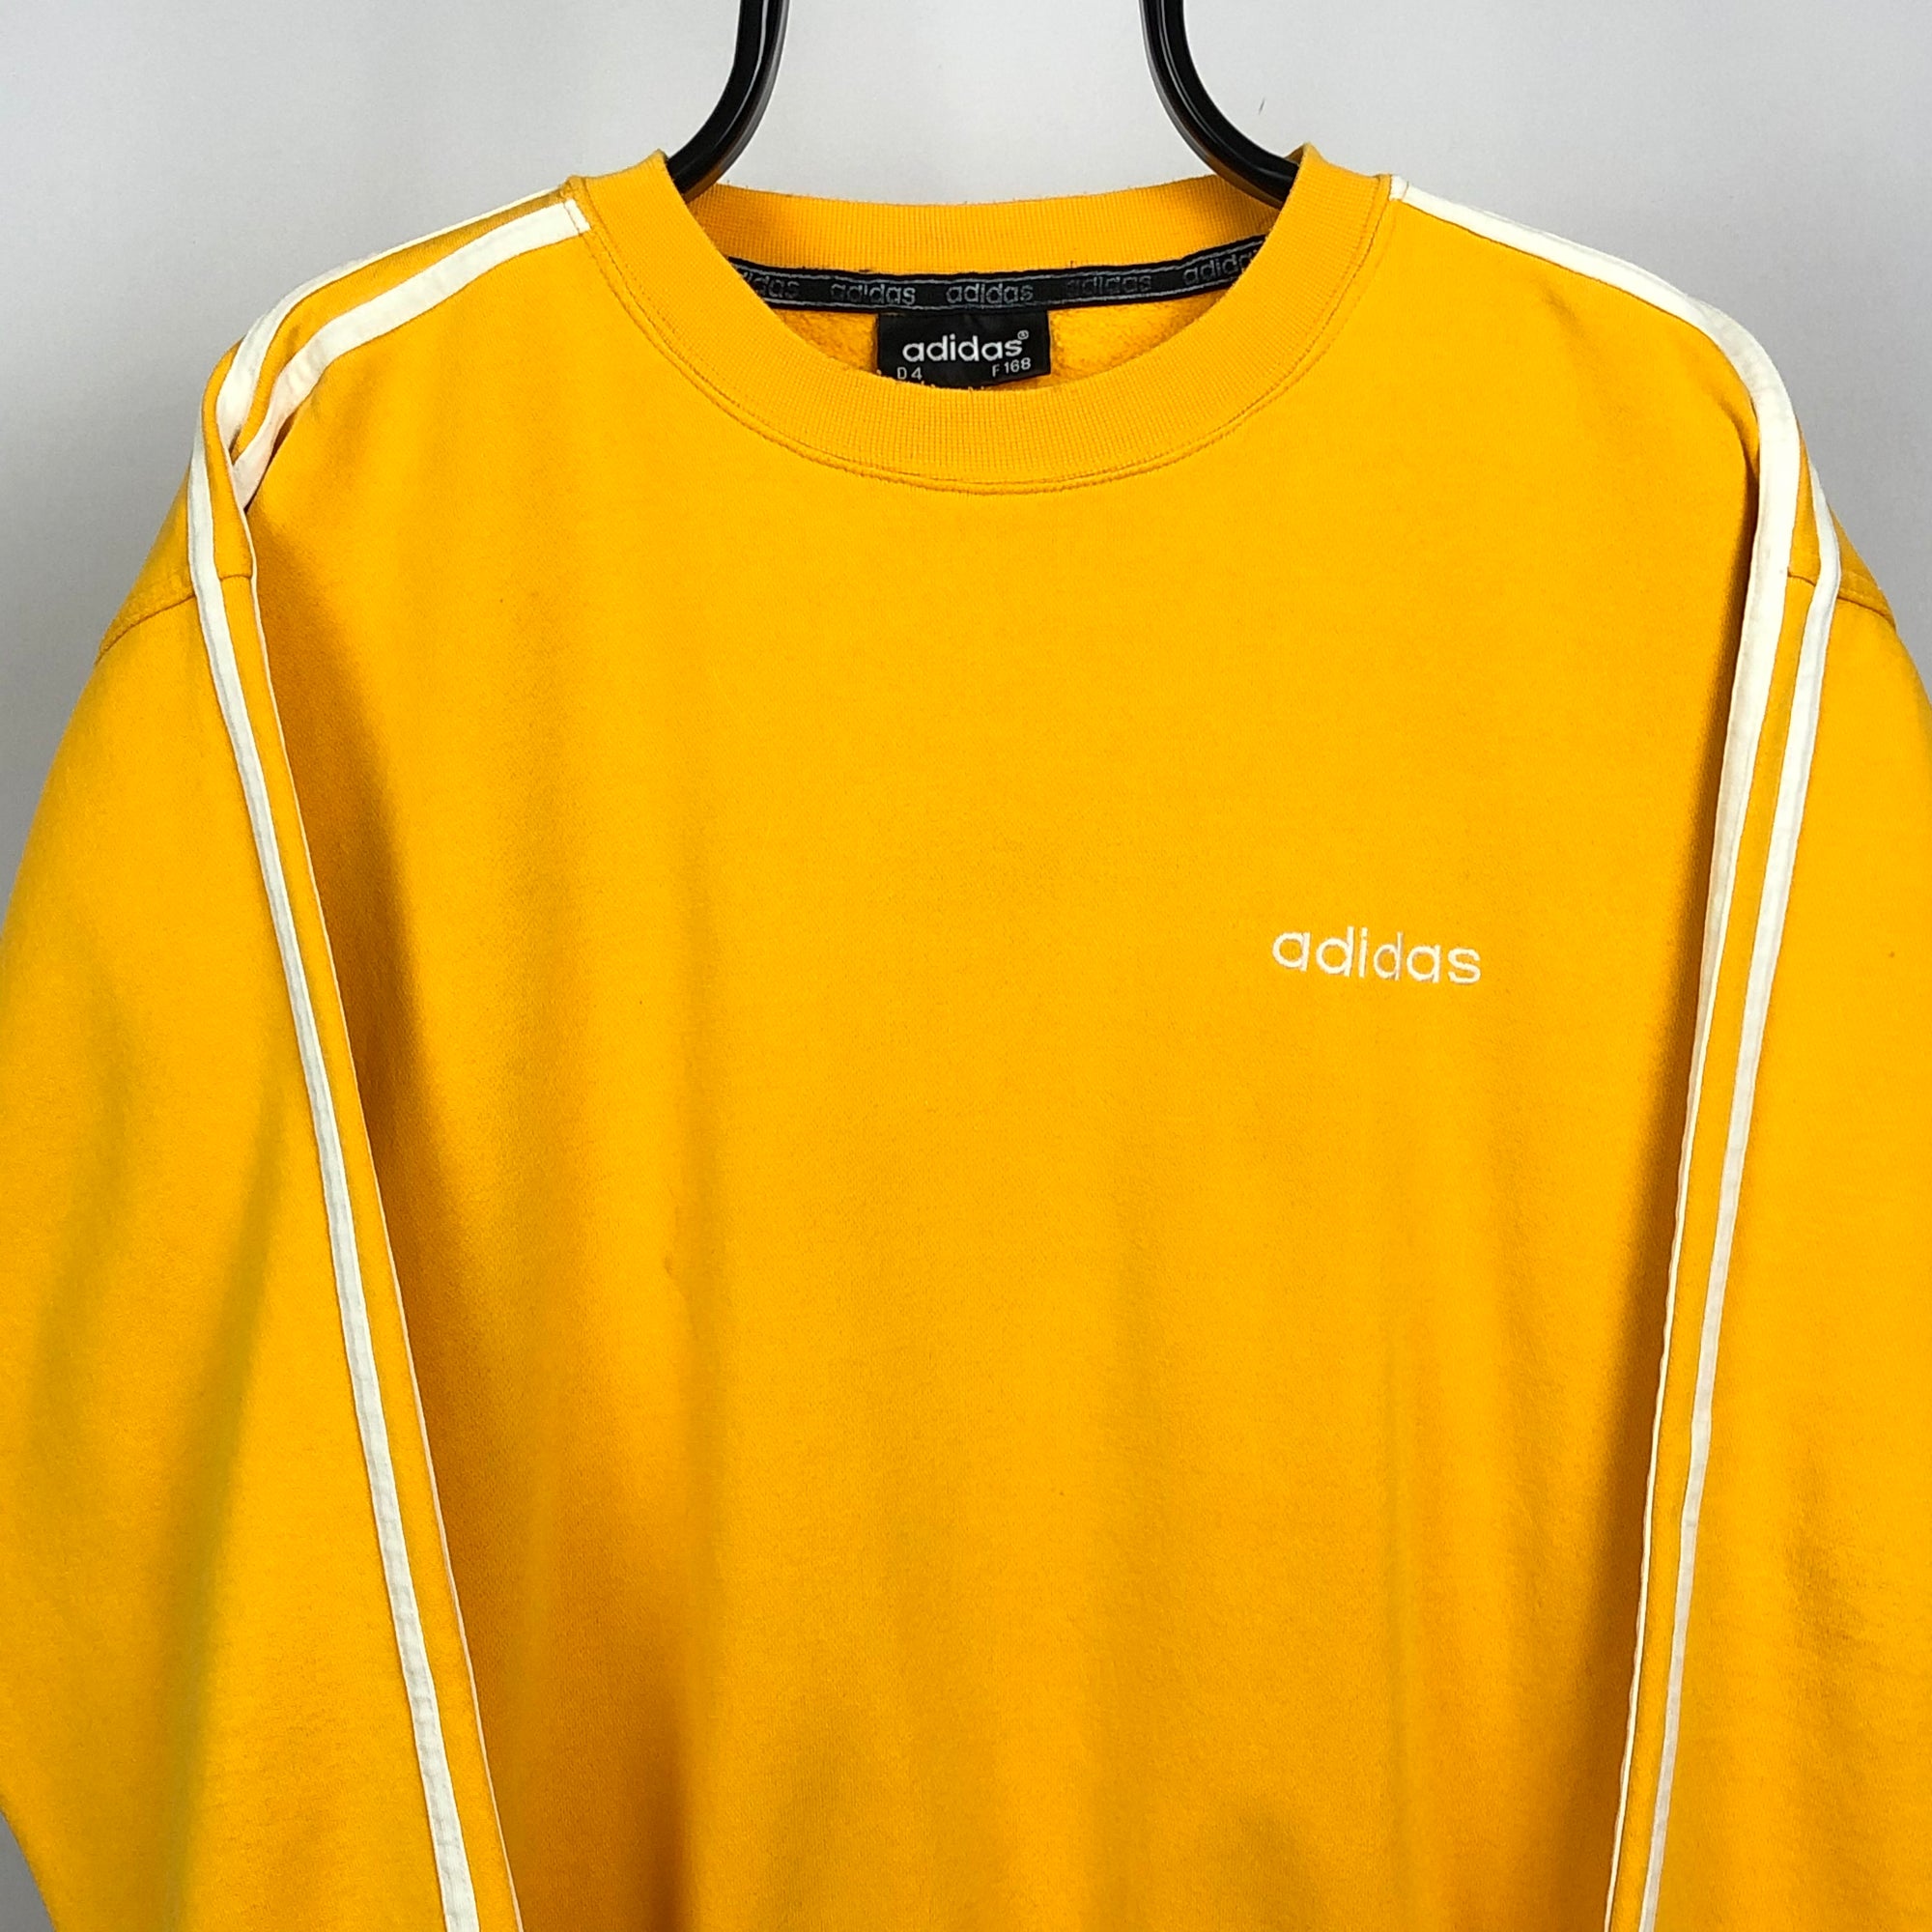 Vintage Adidas Spellout Sweatshirt in Yellow - Men's Medium/Women's Large